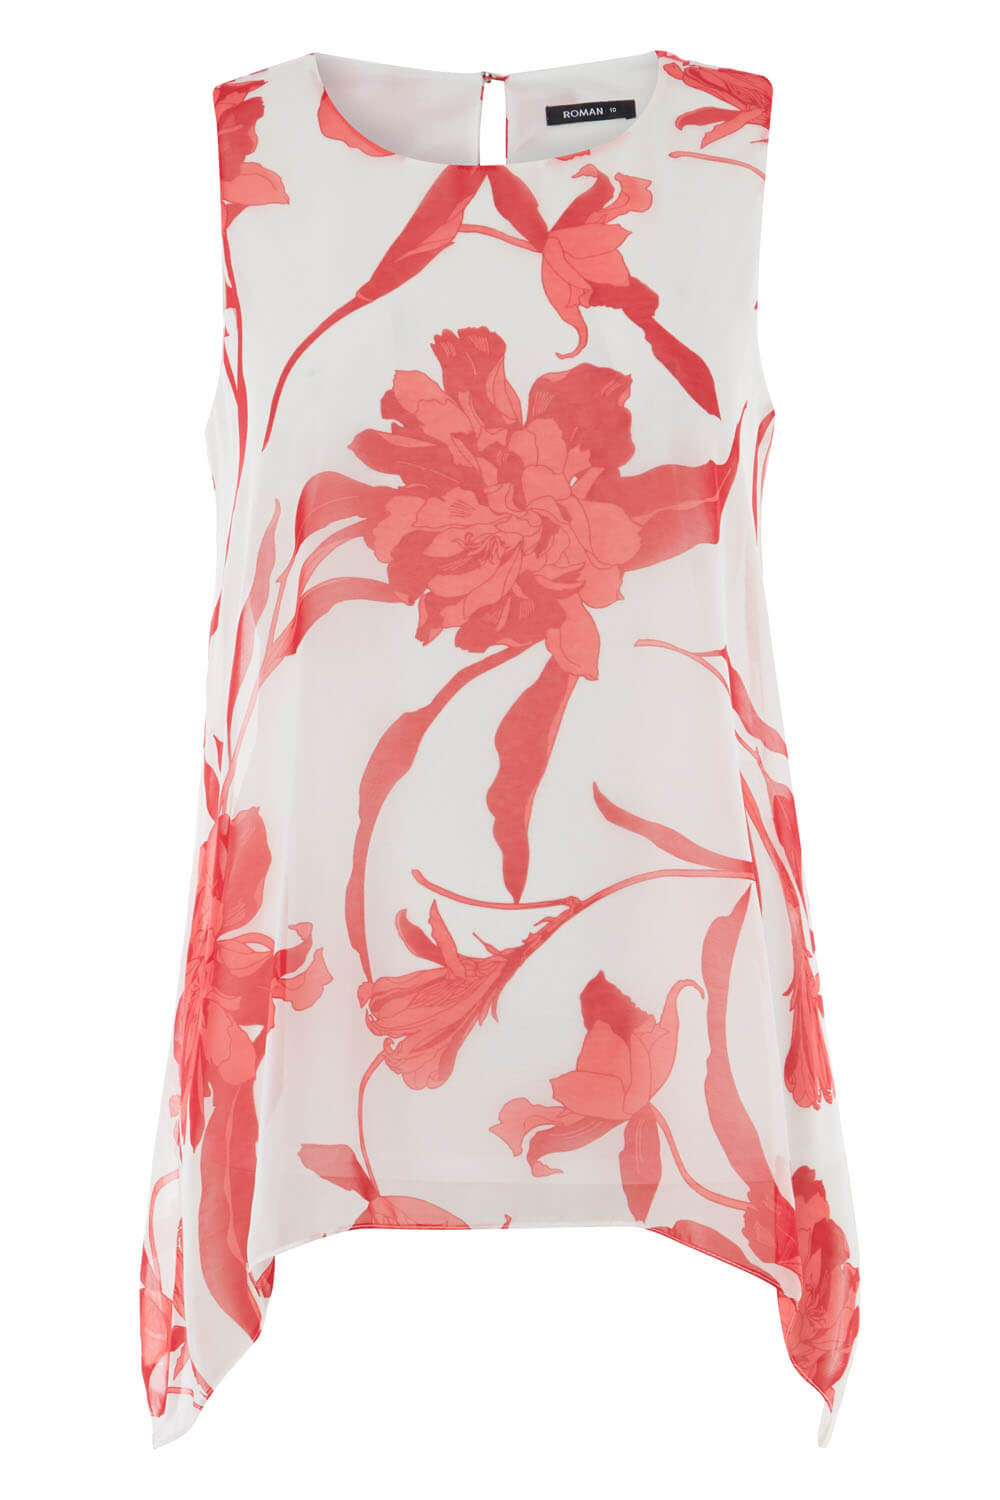 Floral Print Sleeveless Top in Red - Roman Originals UK